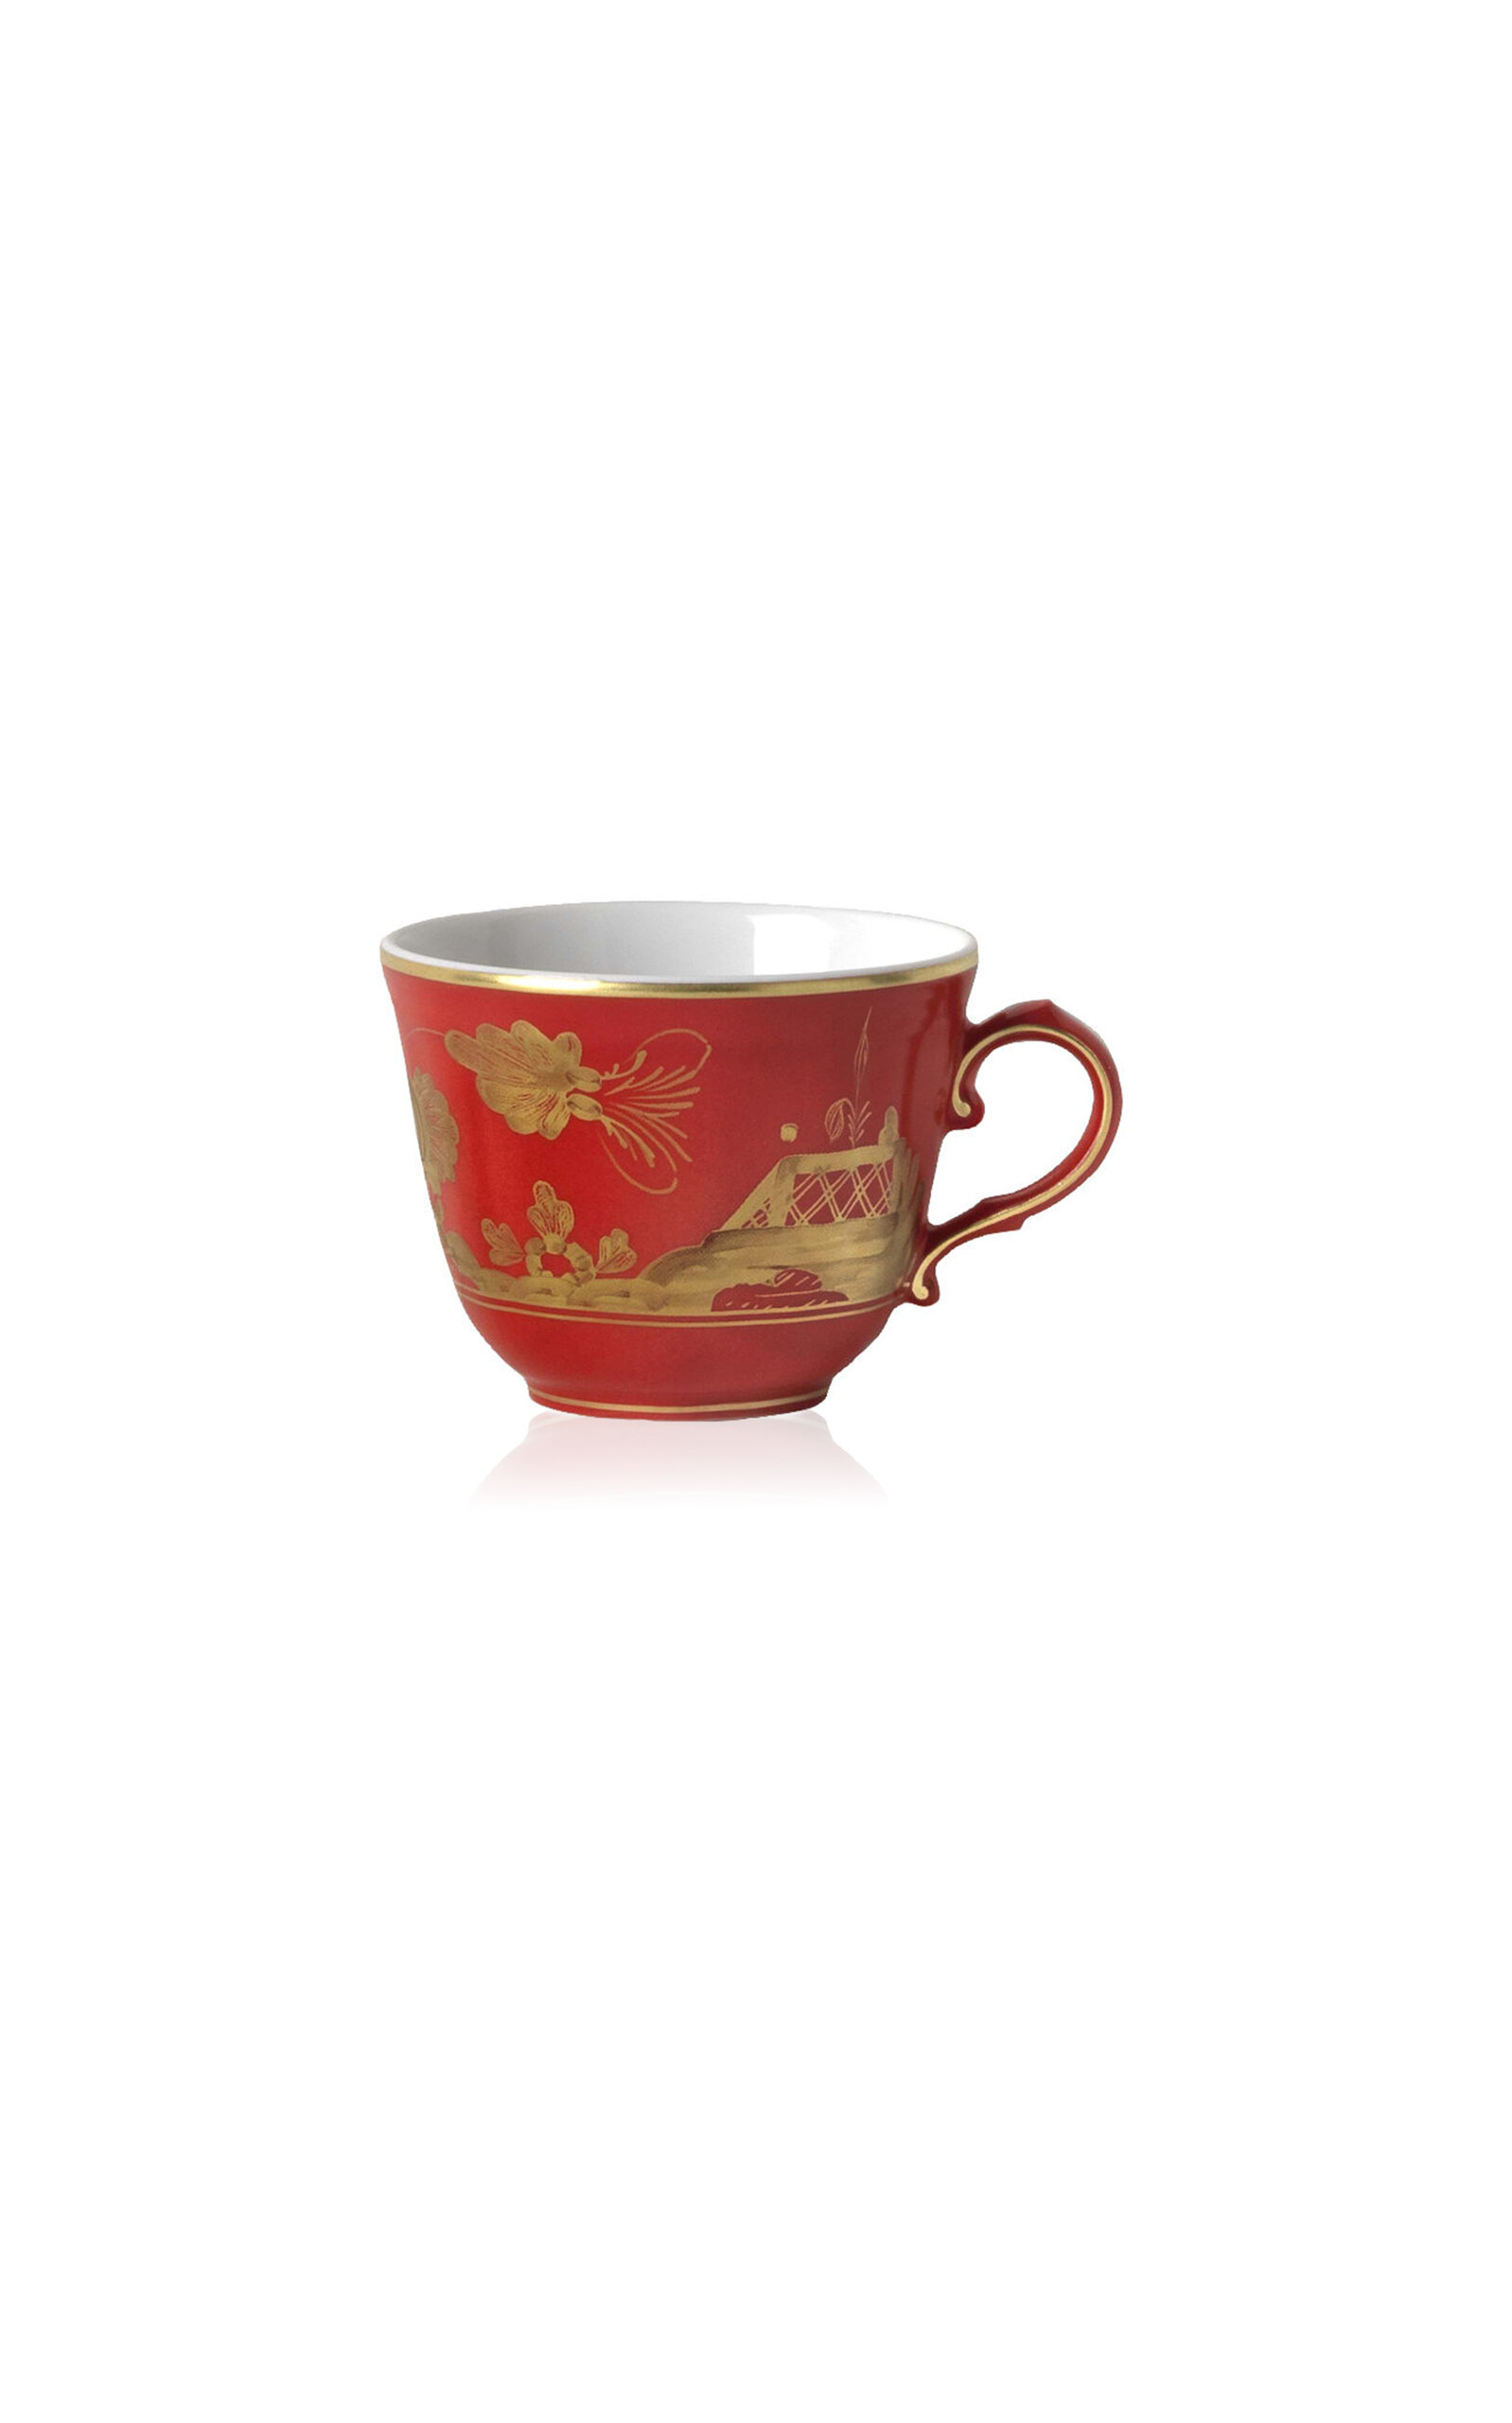 Ginori 1735 Antico Doccia Porcelain Coffee Cup In Red